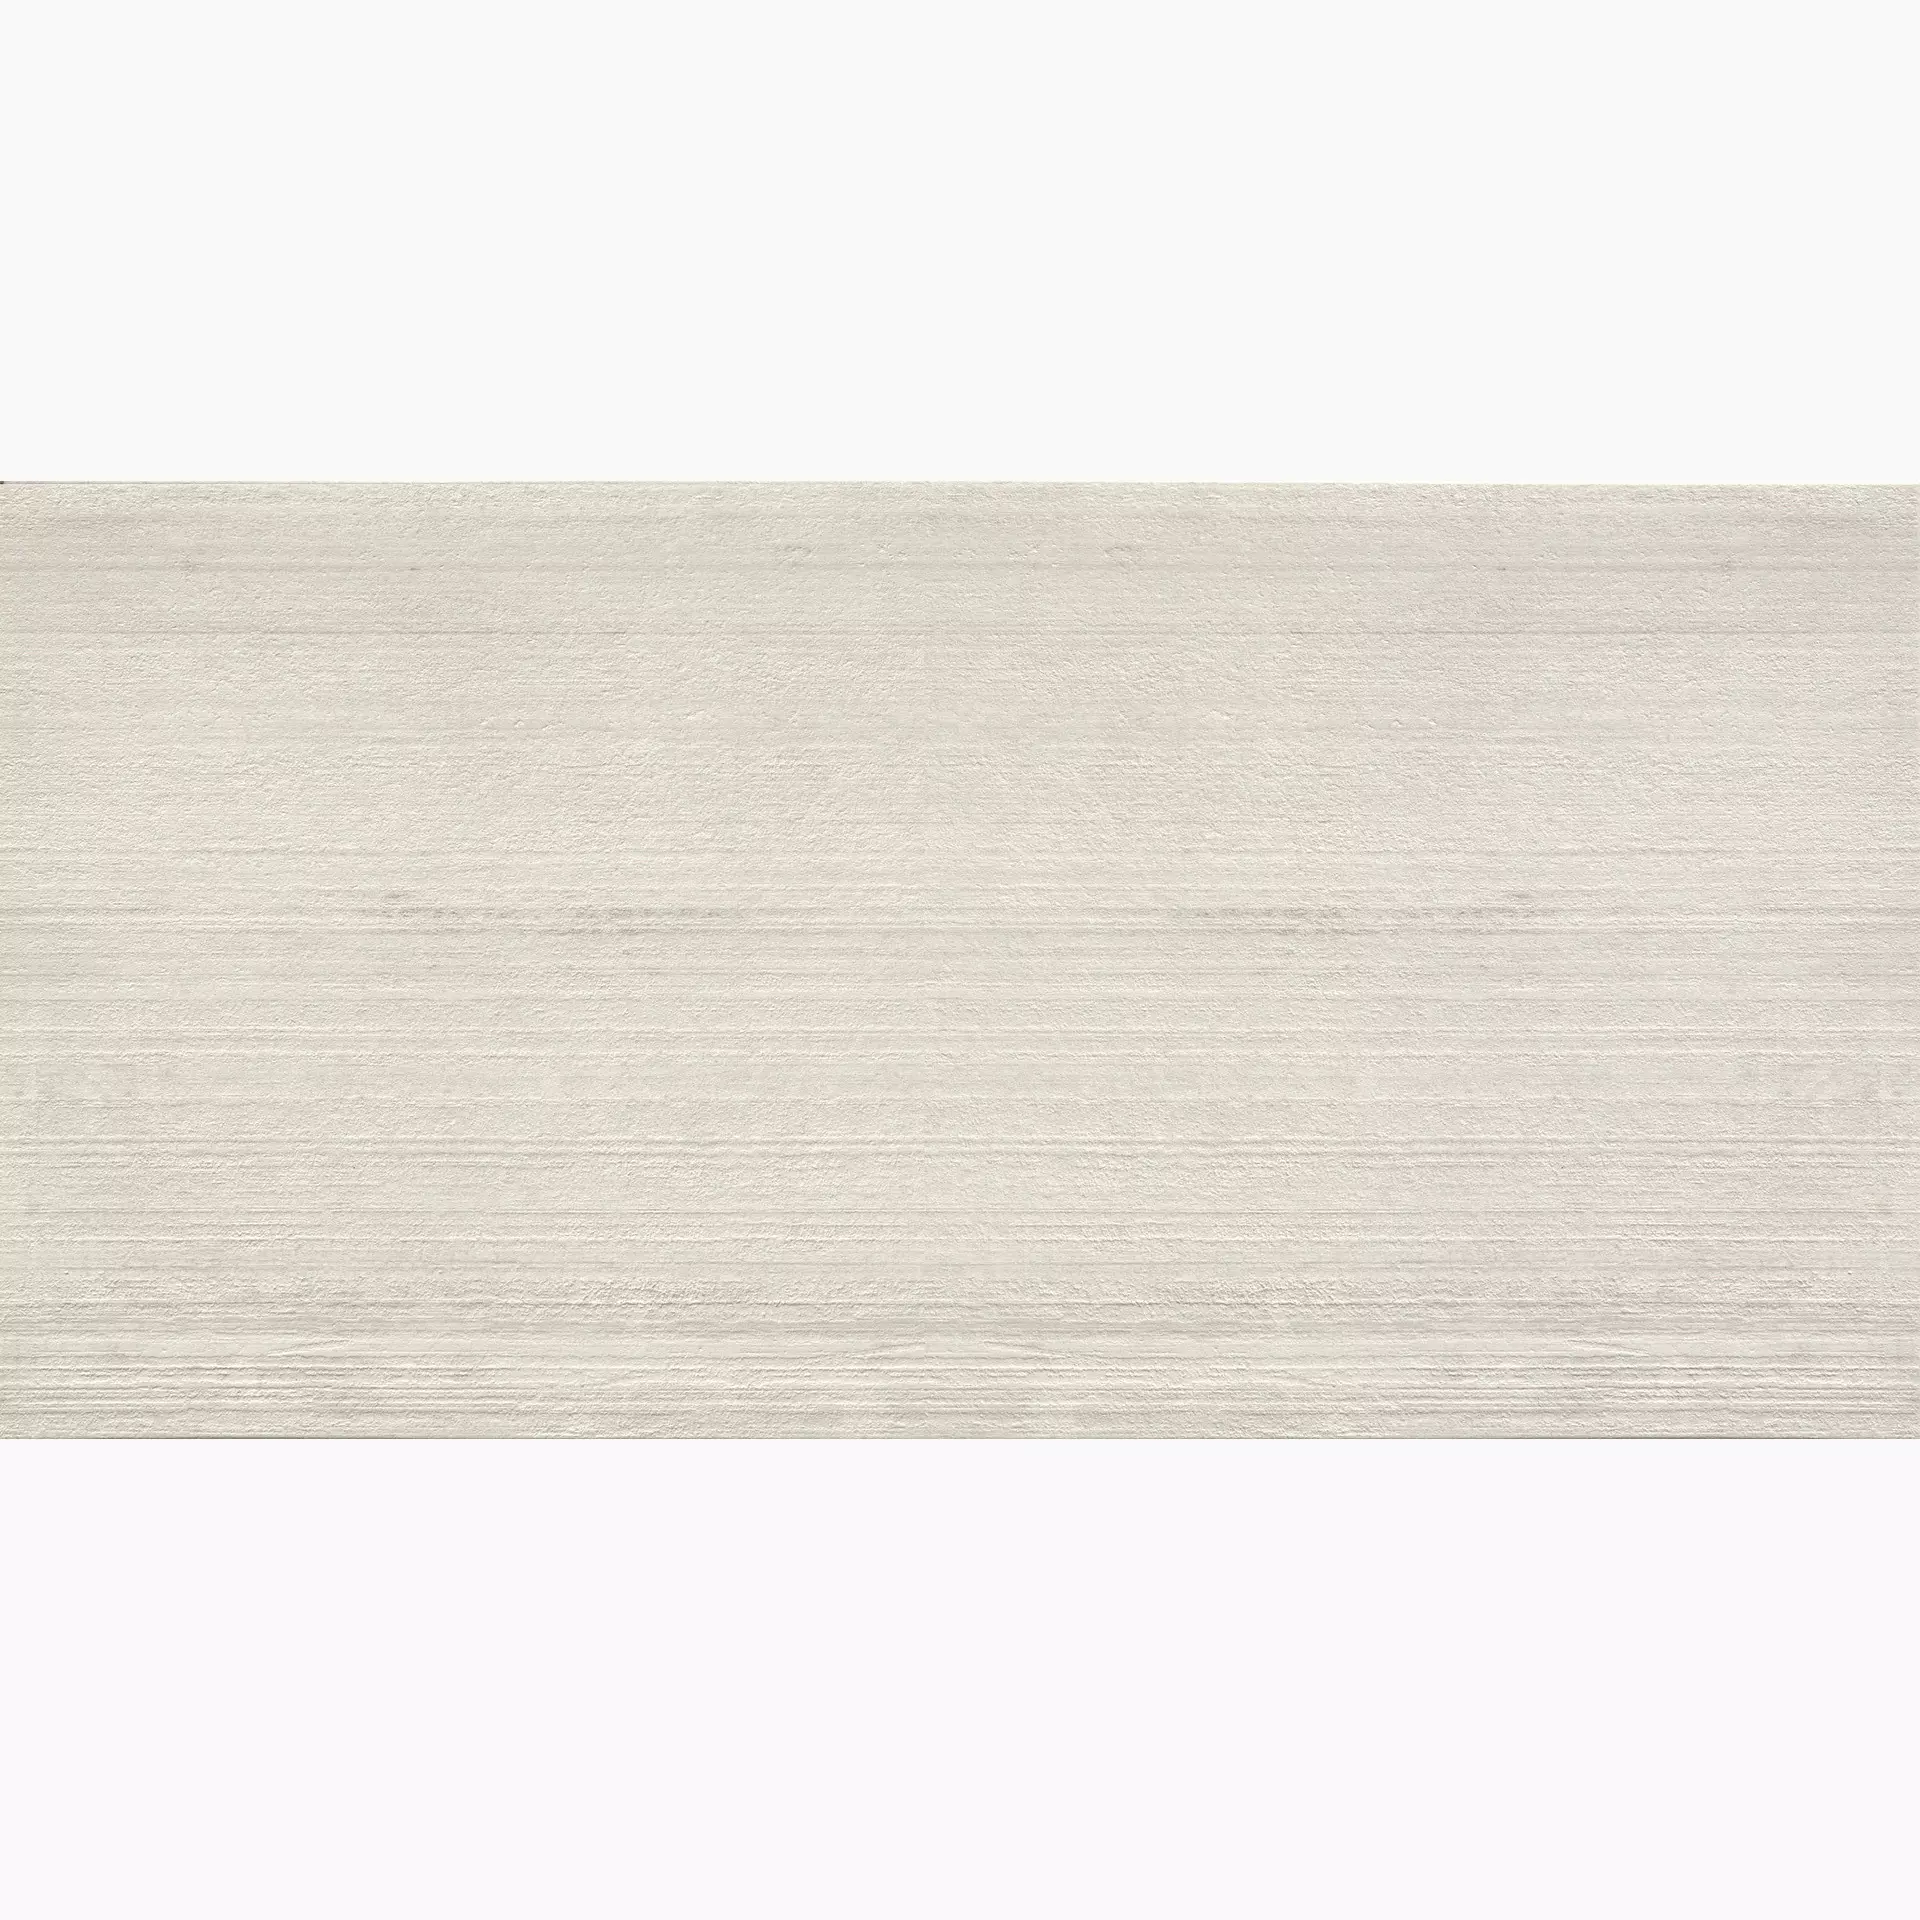 Casalgrande Cemento Bianco Cassero 3790165 30x60cm rectified 10mm